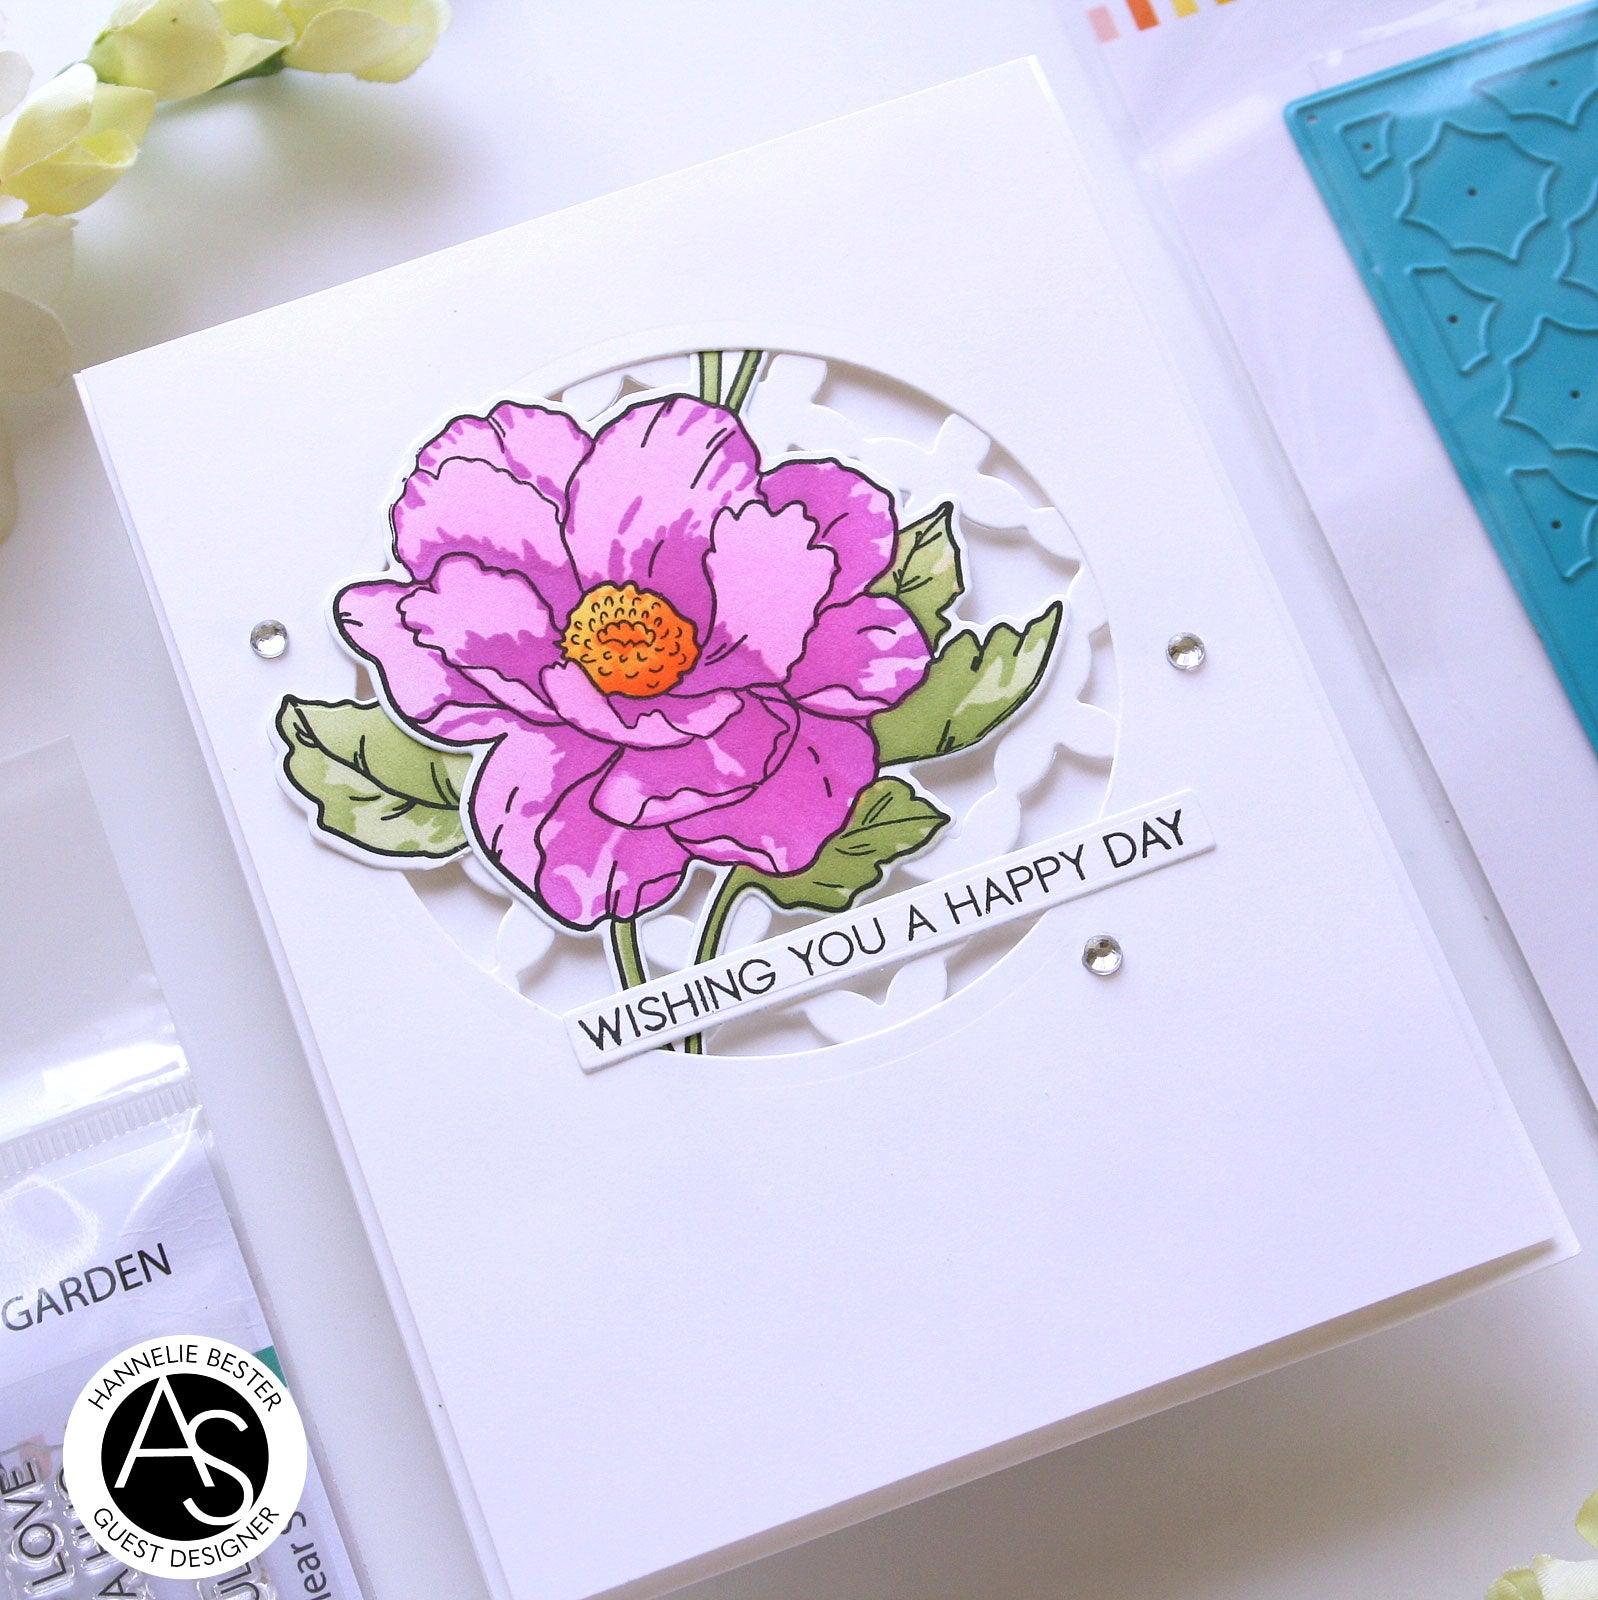 Floral-Lattice-Cover-Die-Alex-Syberia-Designs-Cardmaking-Ideas-Scrapbooking-papercrafting-karten-a2-dies-spring-garden-floral-stamps-layering-stencil